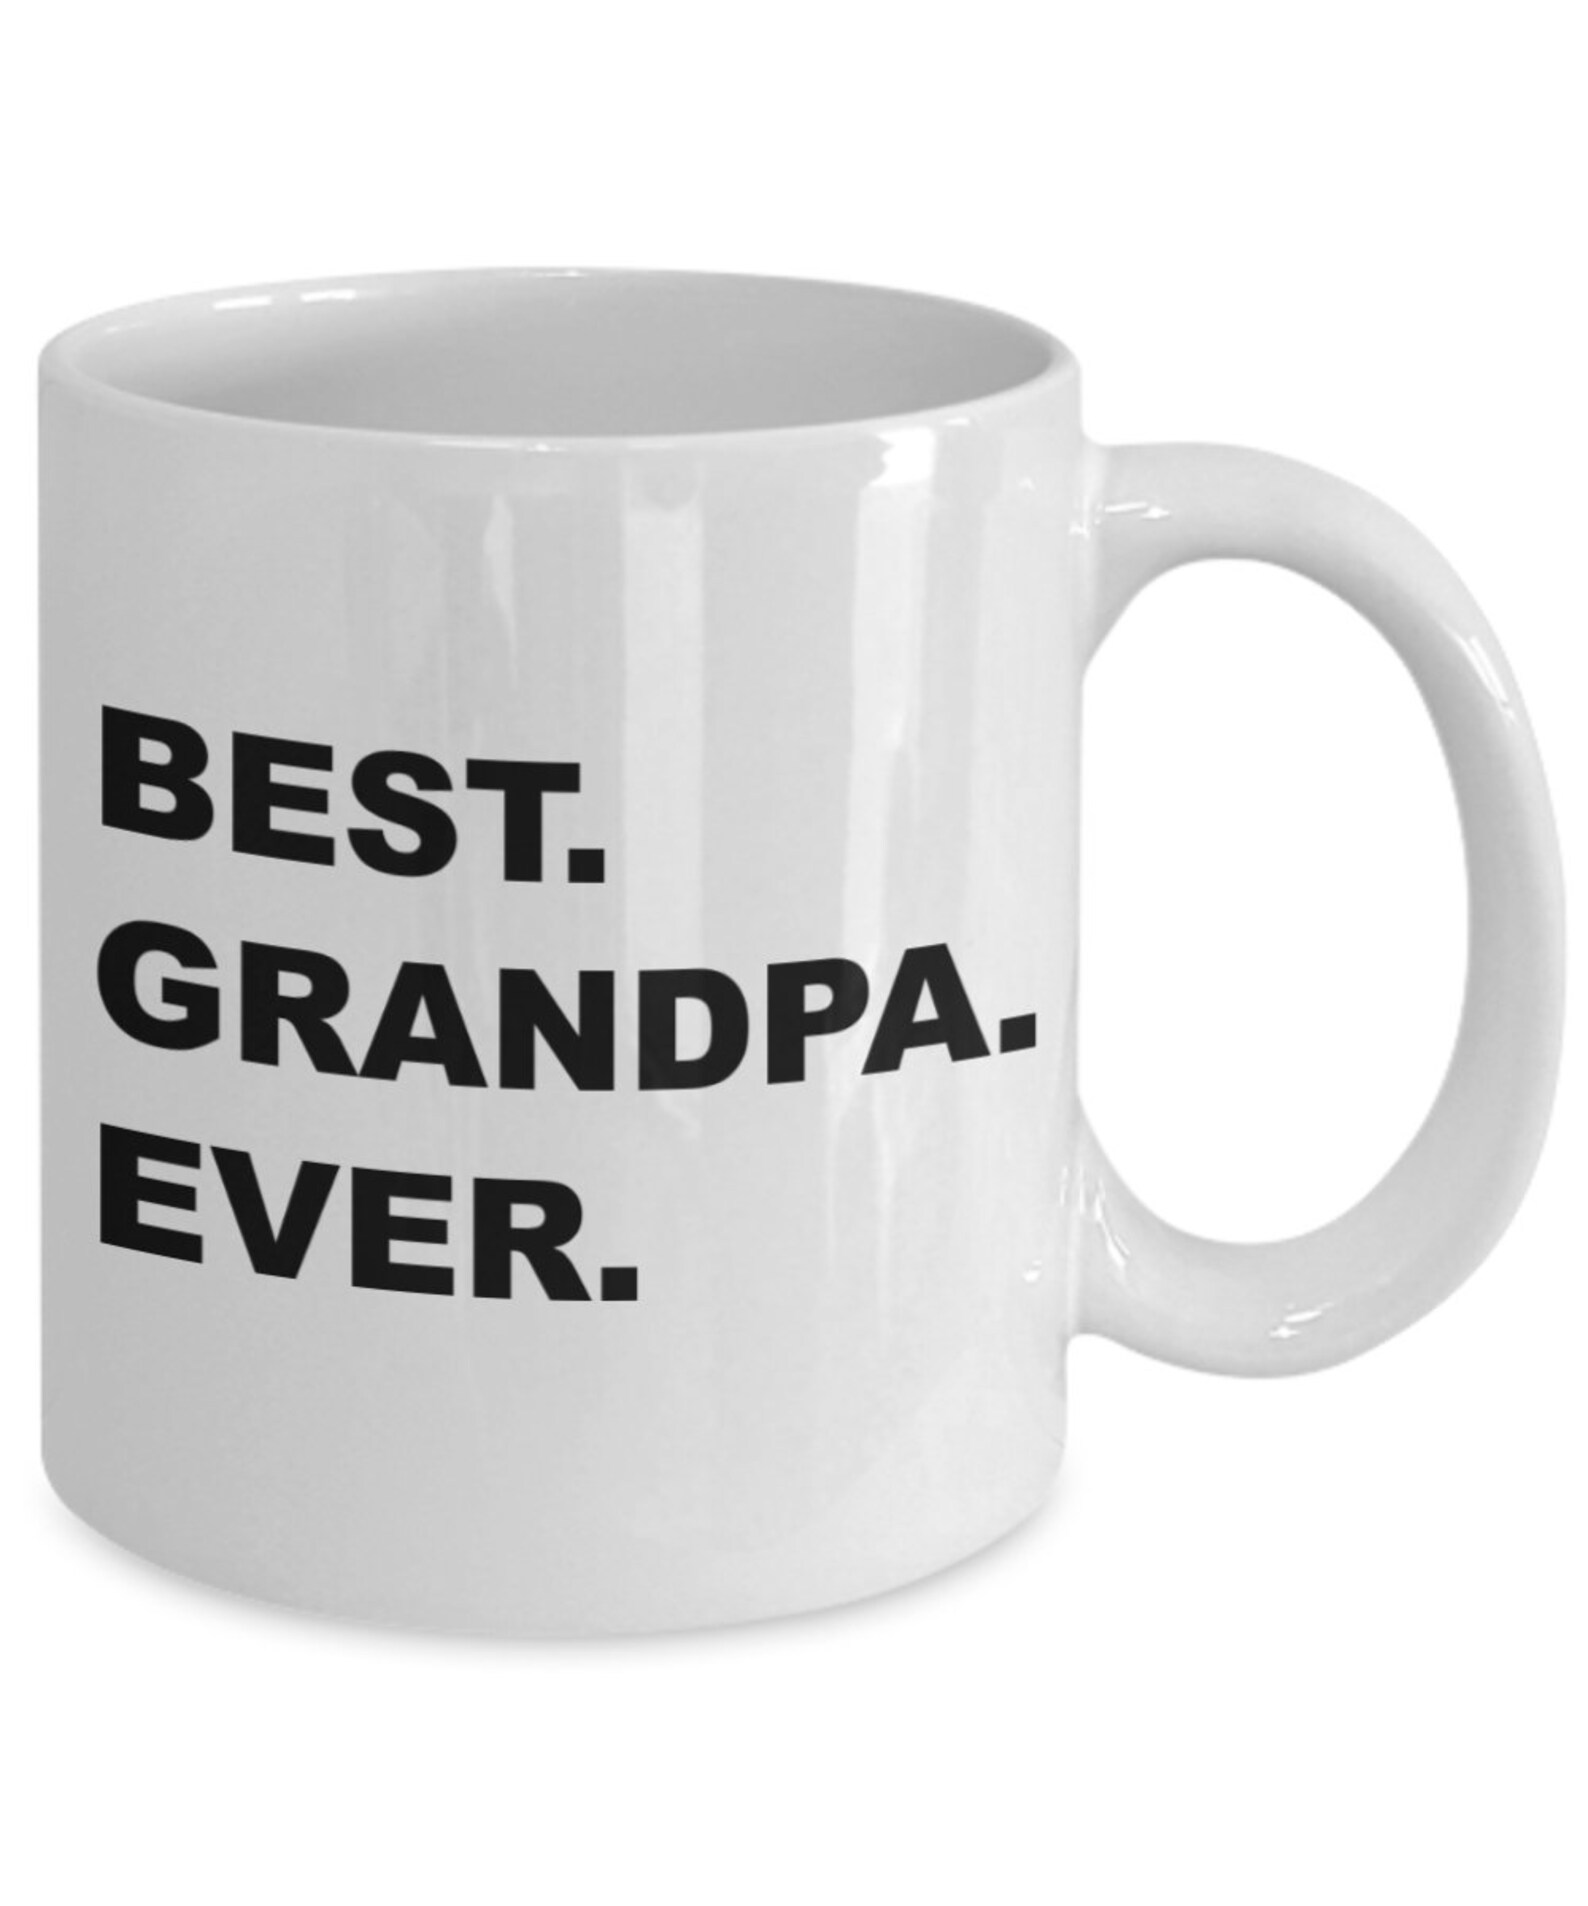 Best grandpa ever coffee mug | Etsy